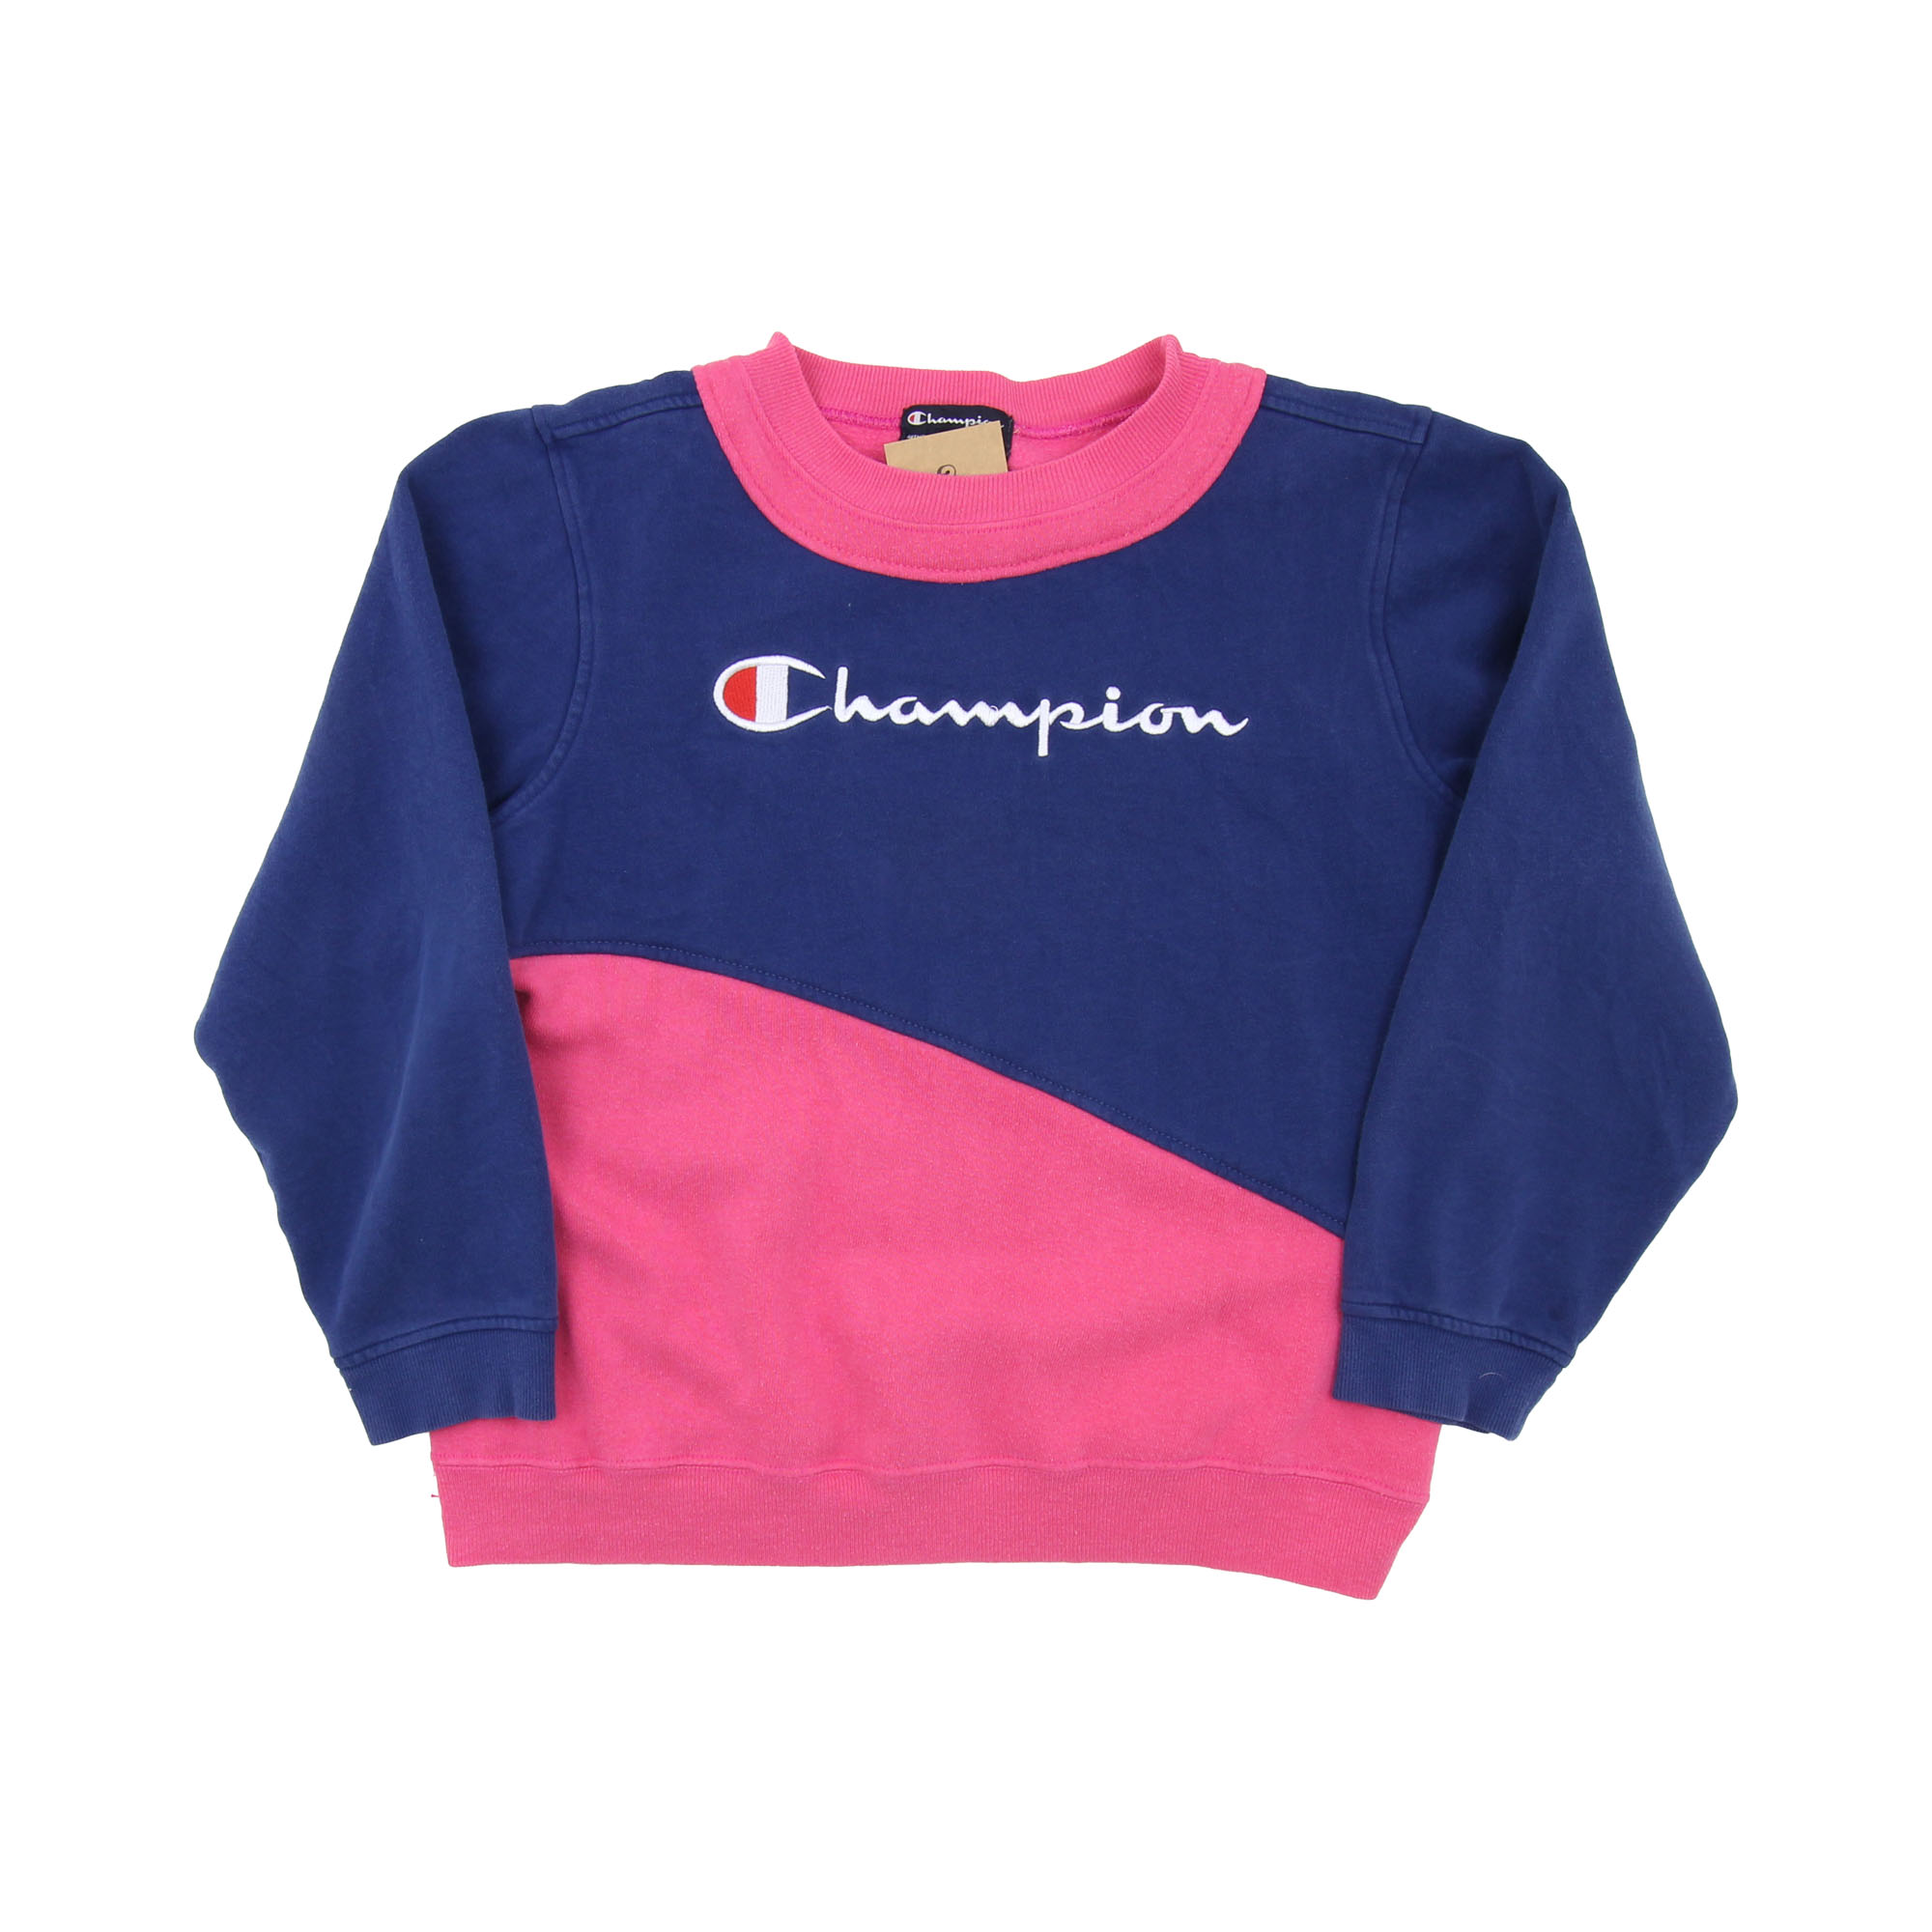 Champion Rework Sweatshirt -  S